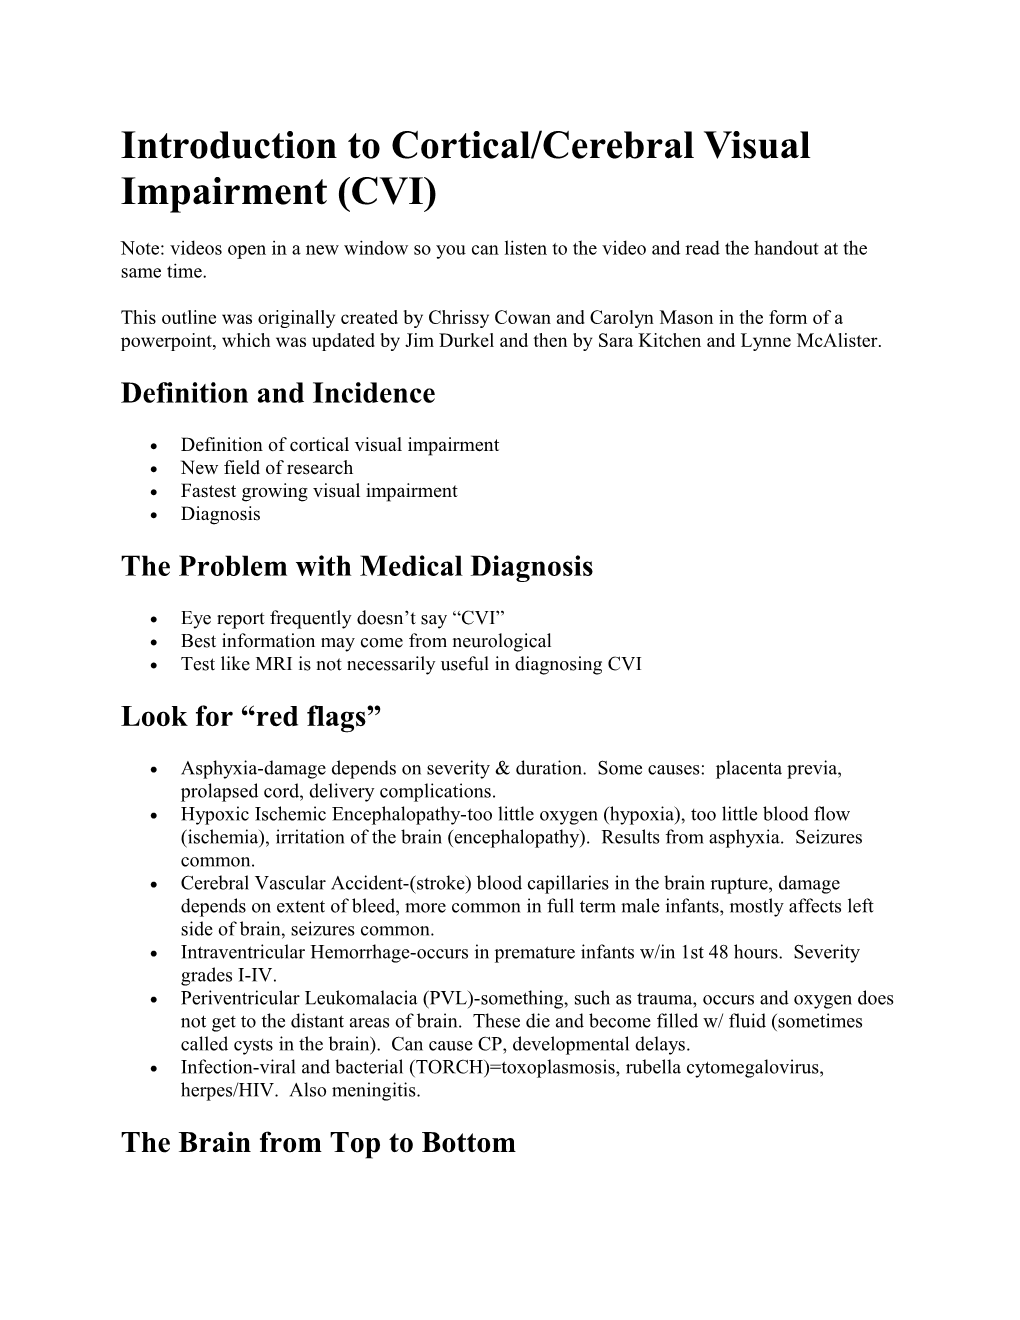 Introduction to Cortical/Cerebral Visual Impairment (CVI)